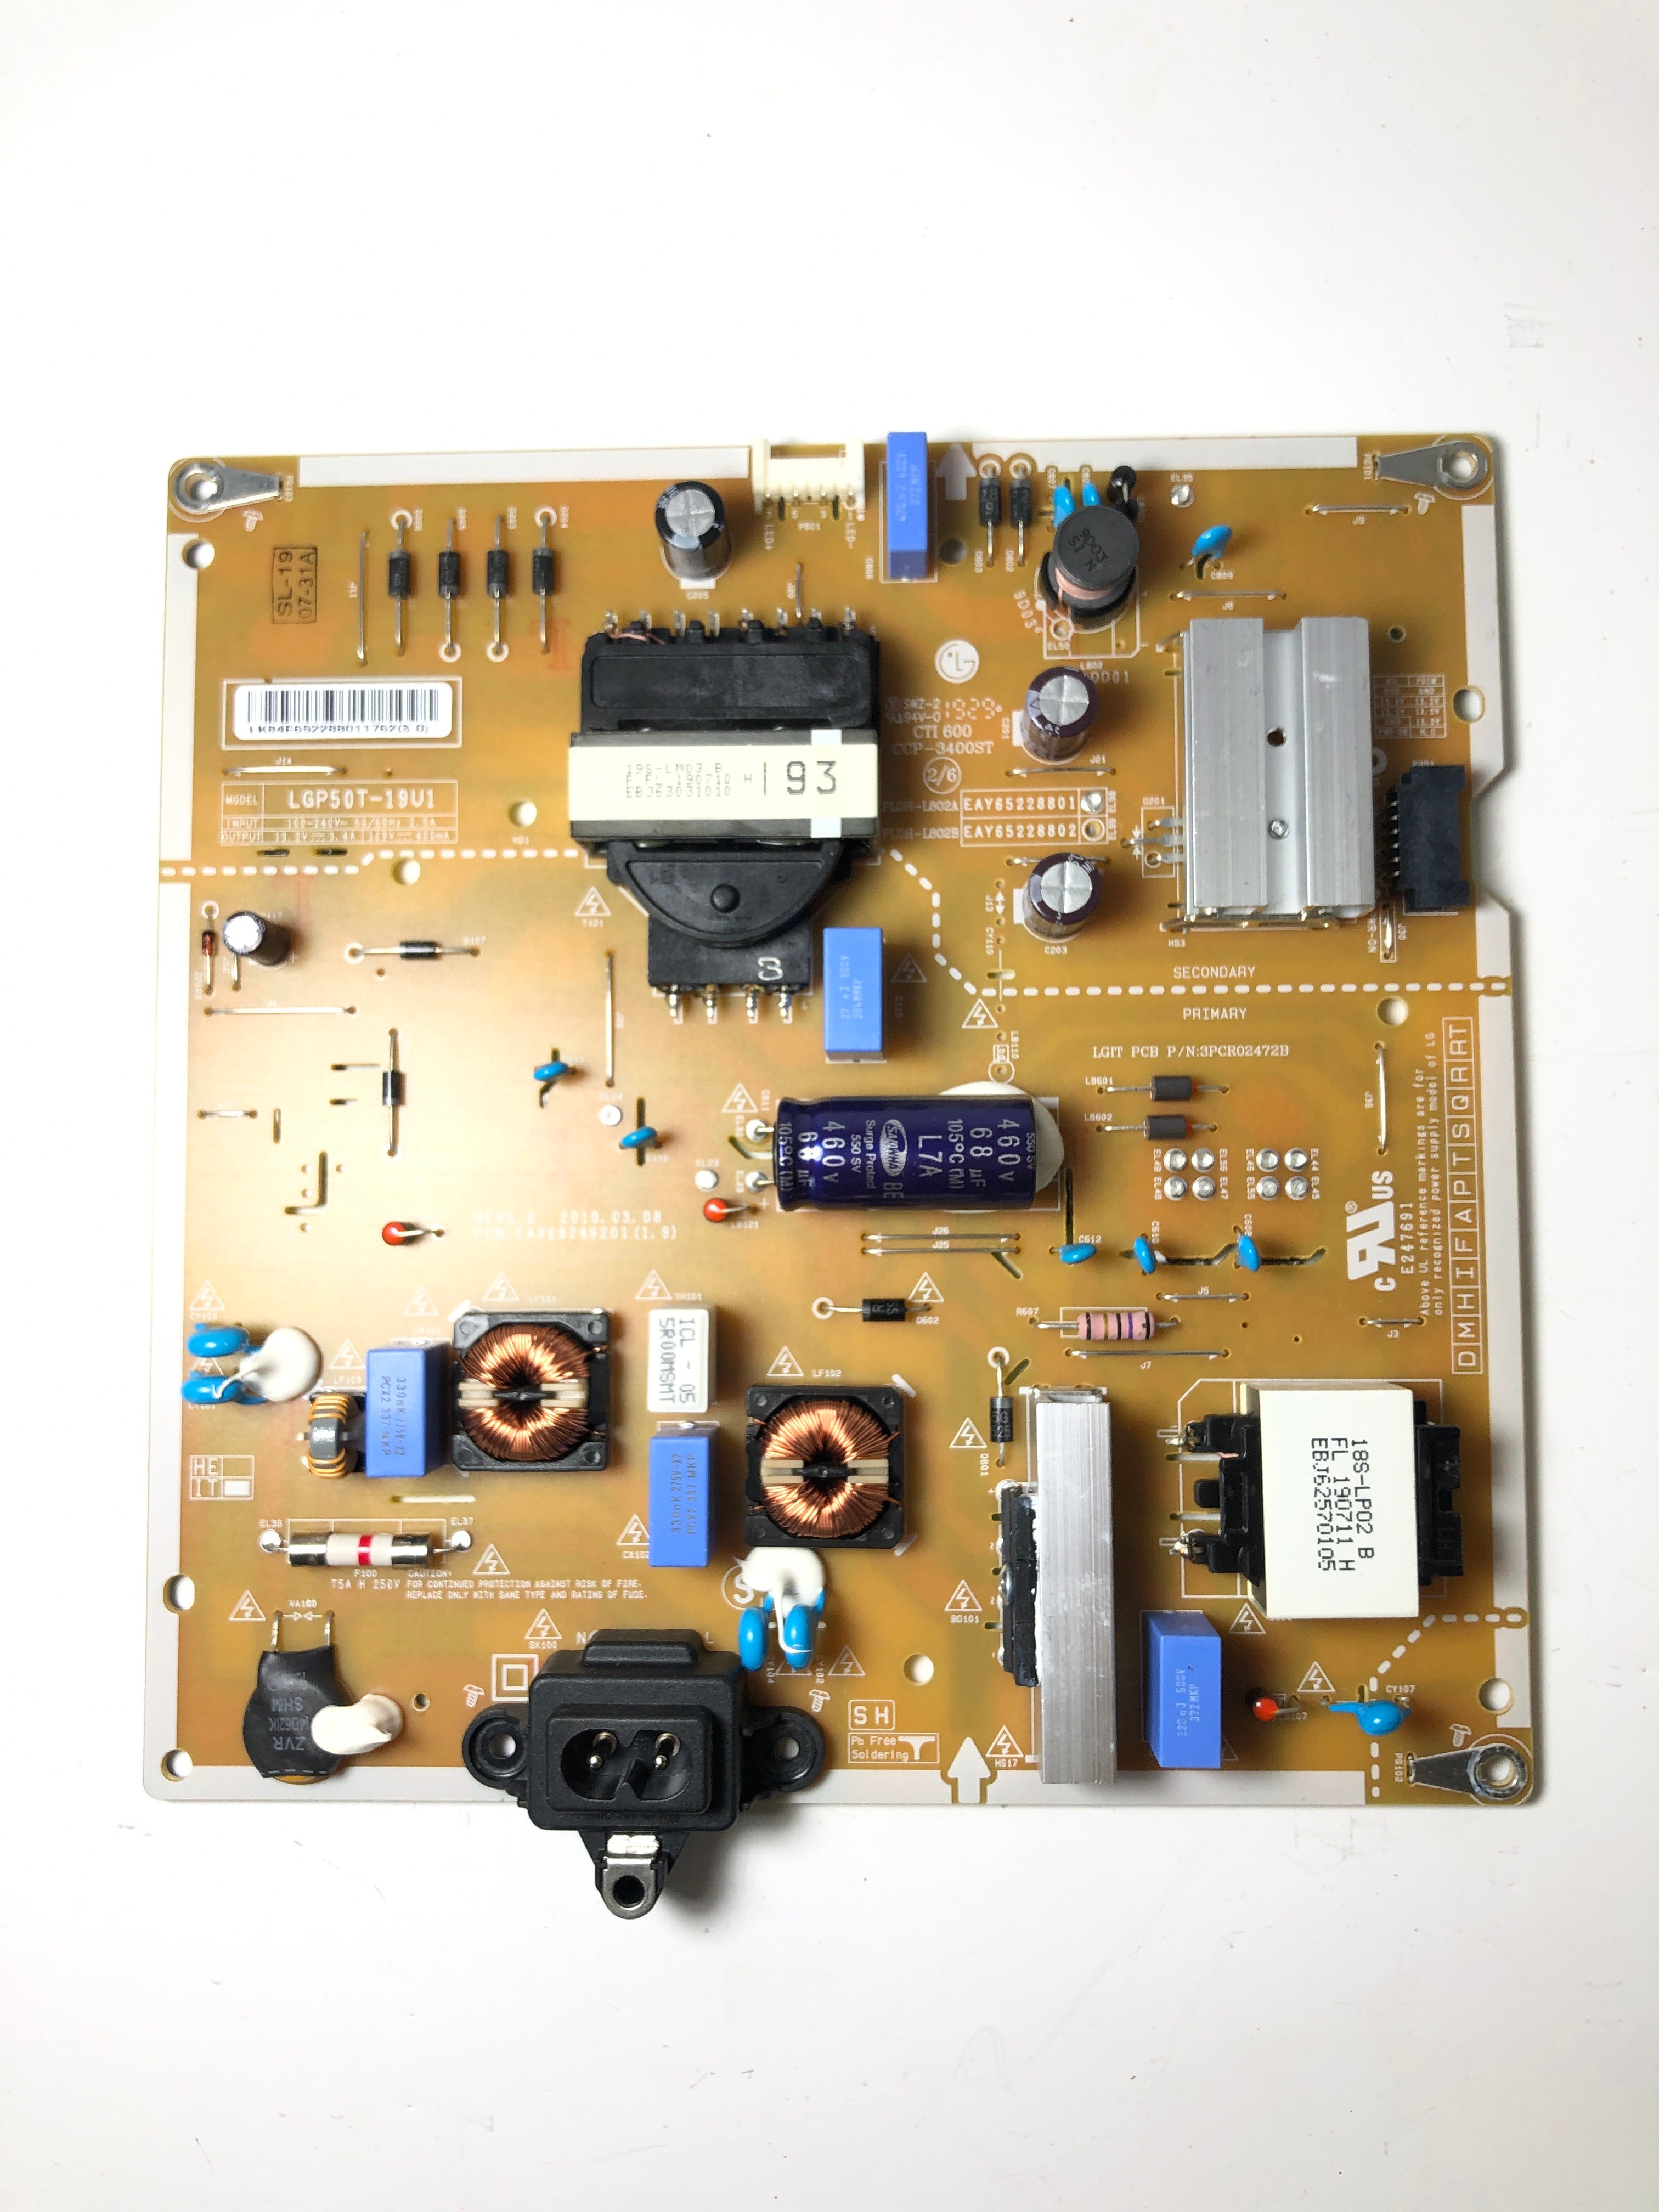 LG EAY65228801 Power Supply/LED Driver Board